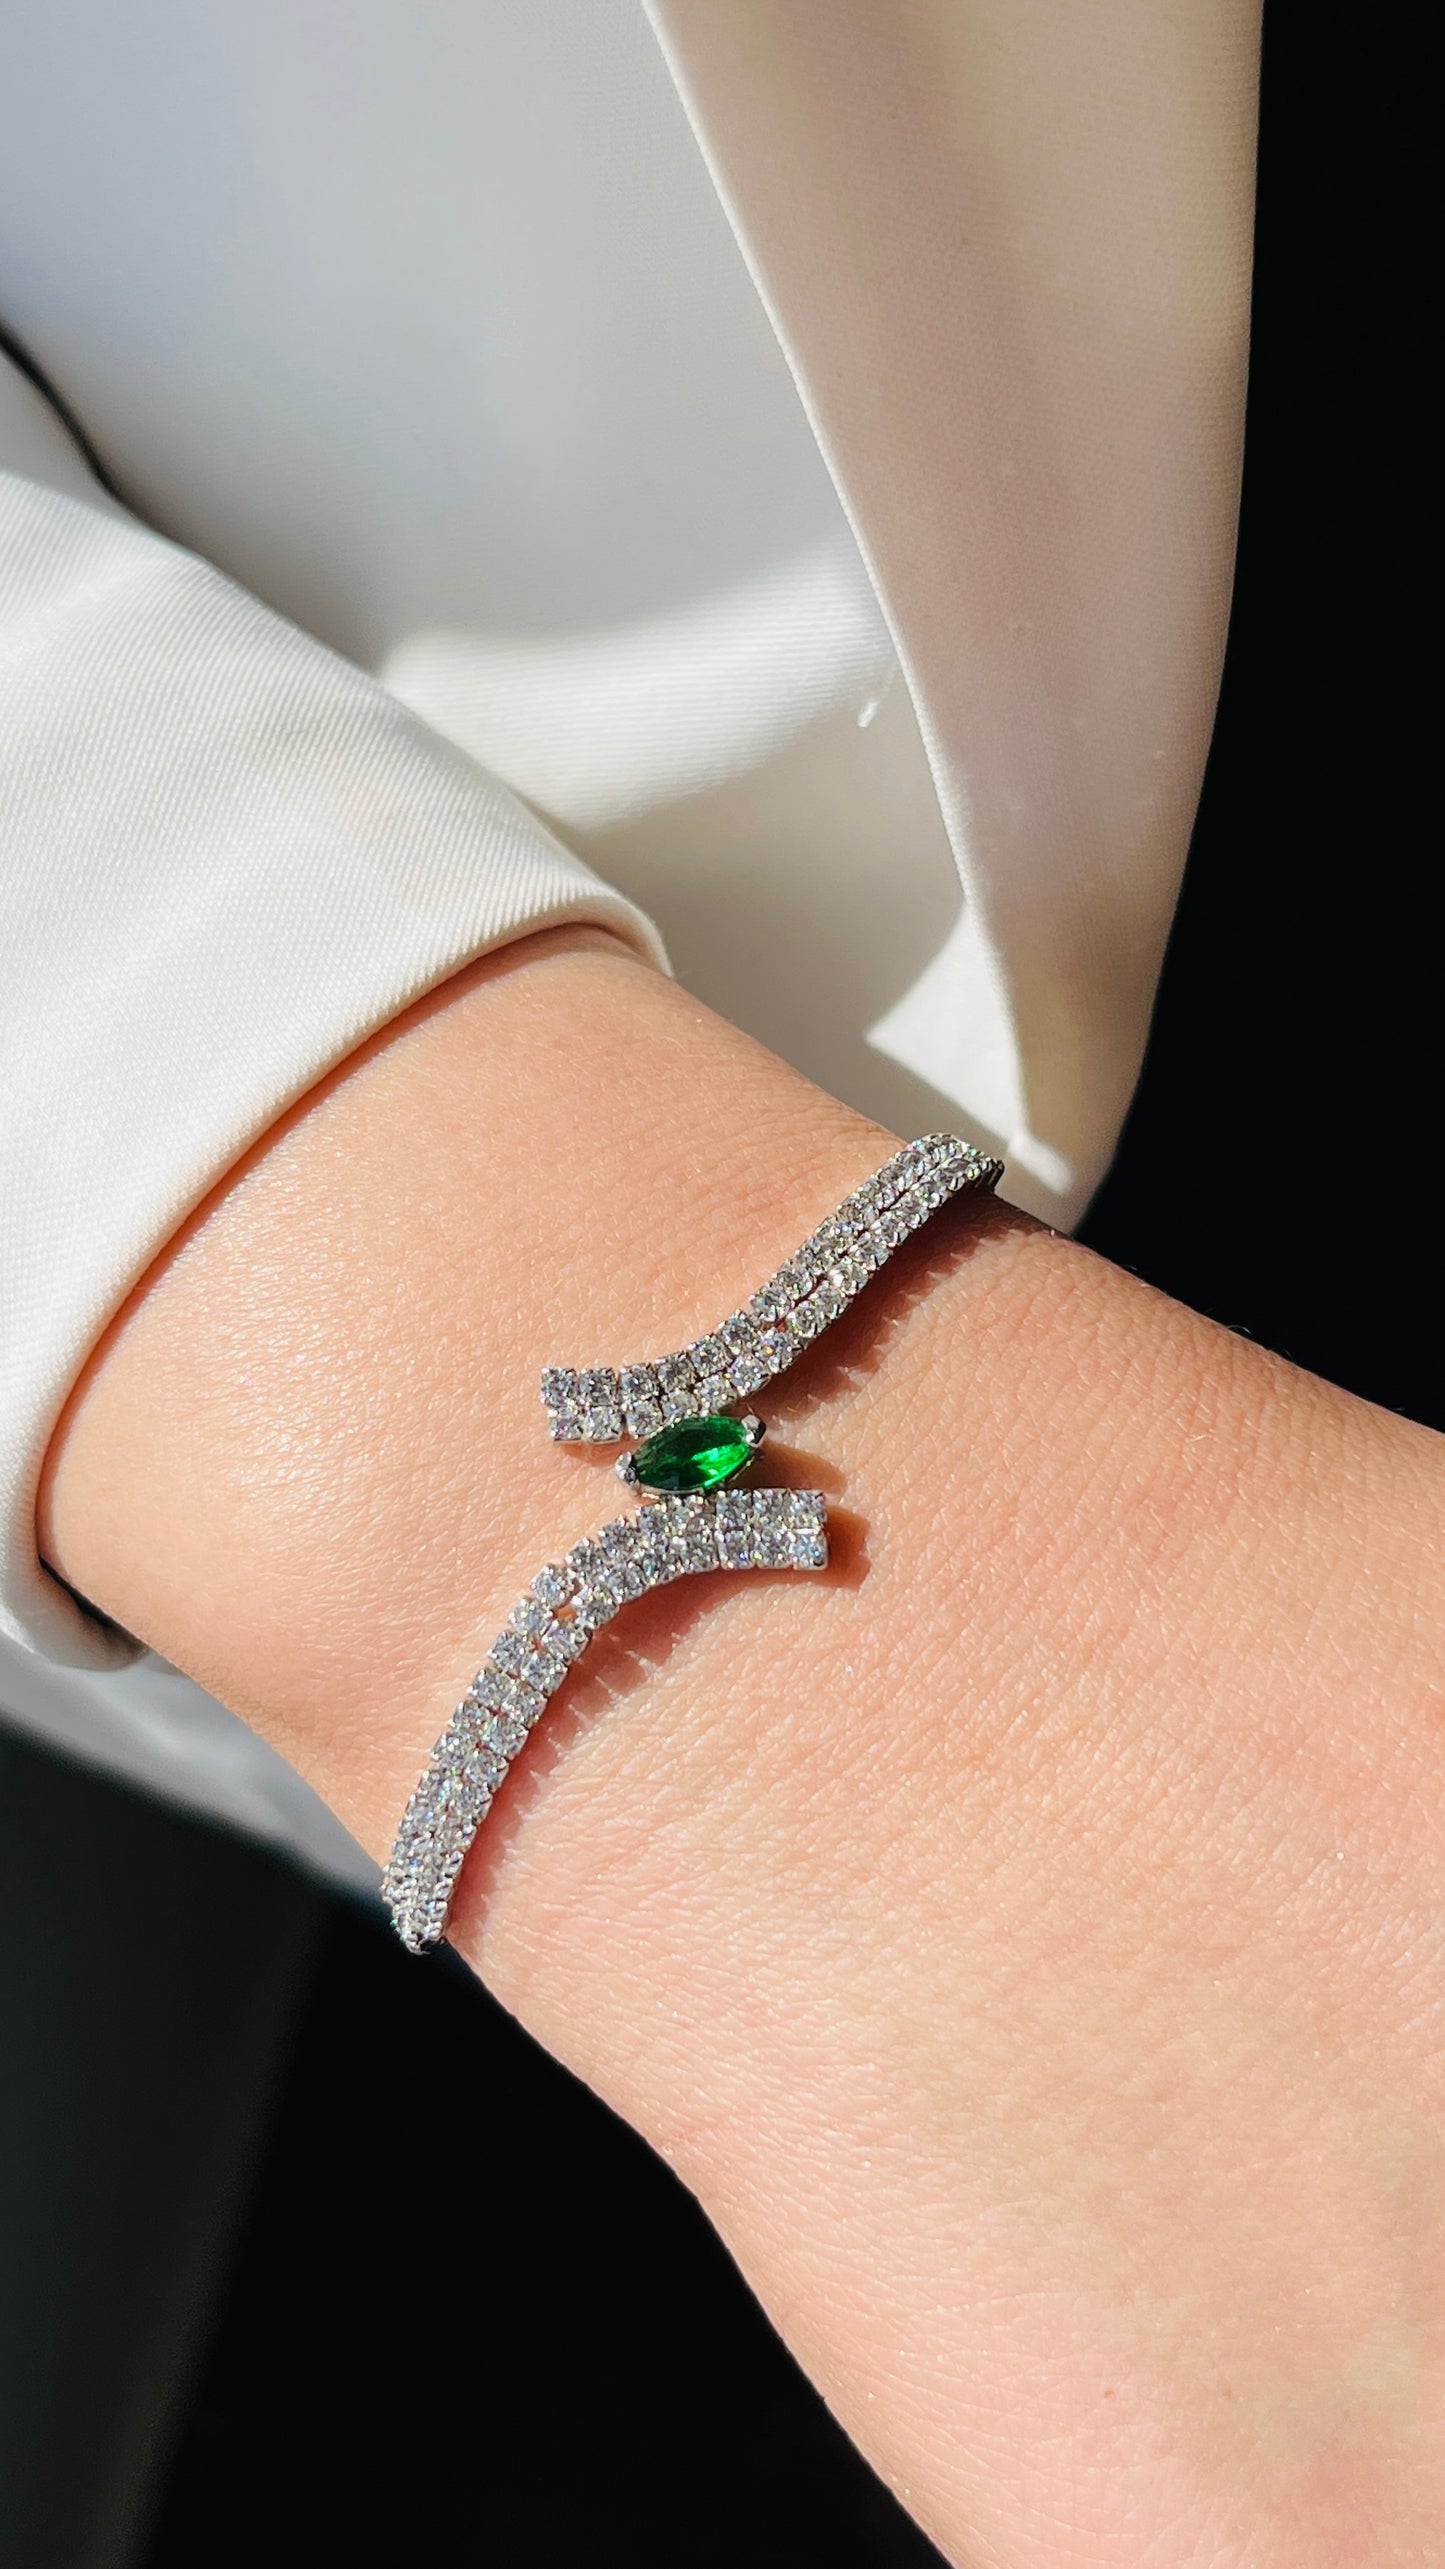 Elegant bracelet with lovely stone